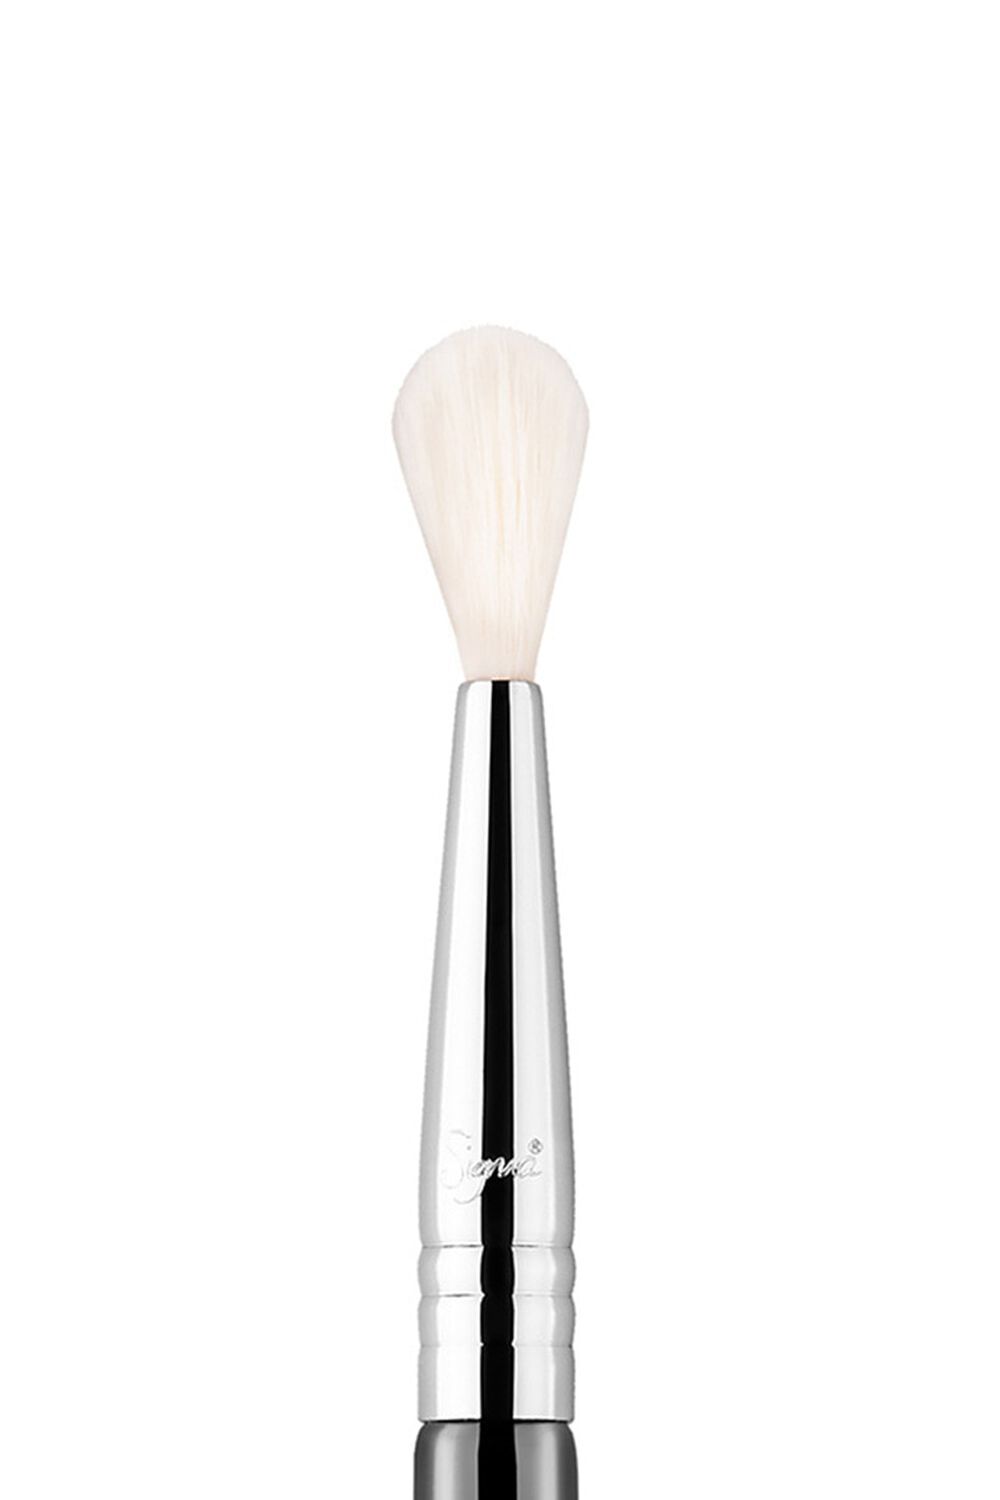 Sigma Beauty E36 – Blending Brush, image 2